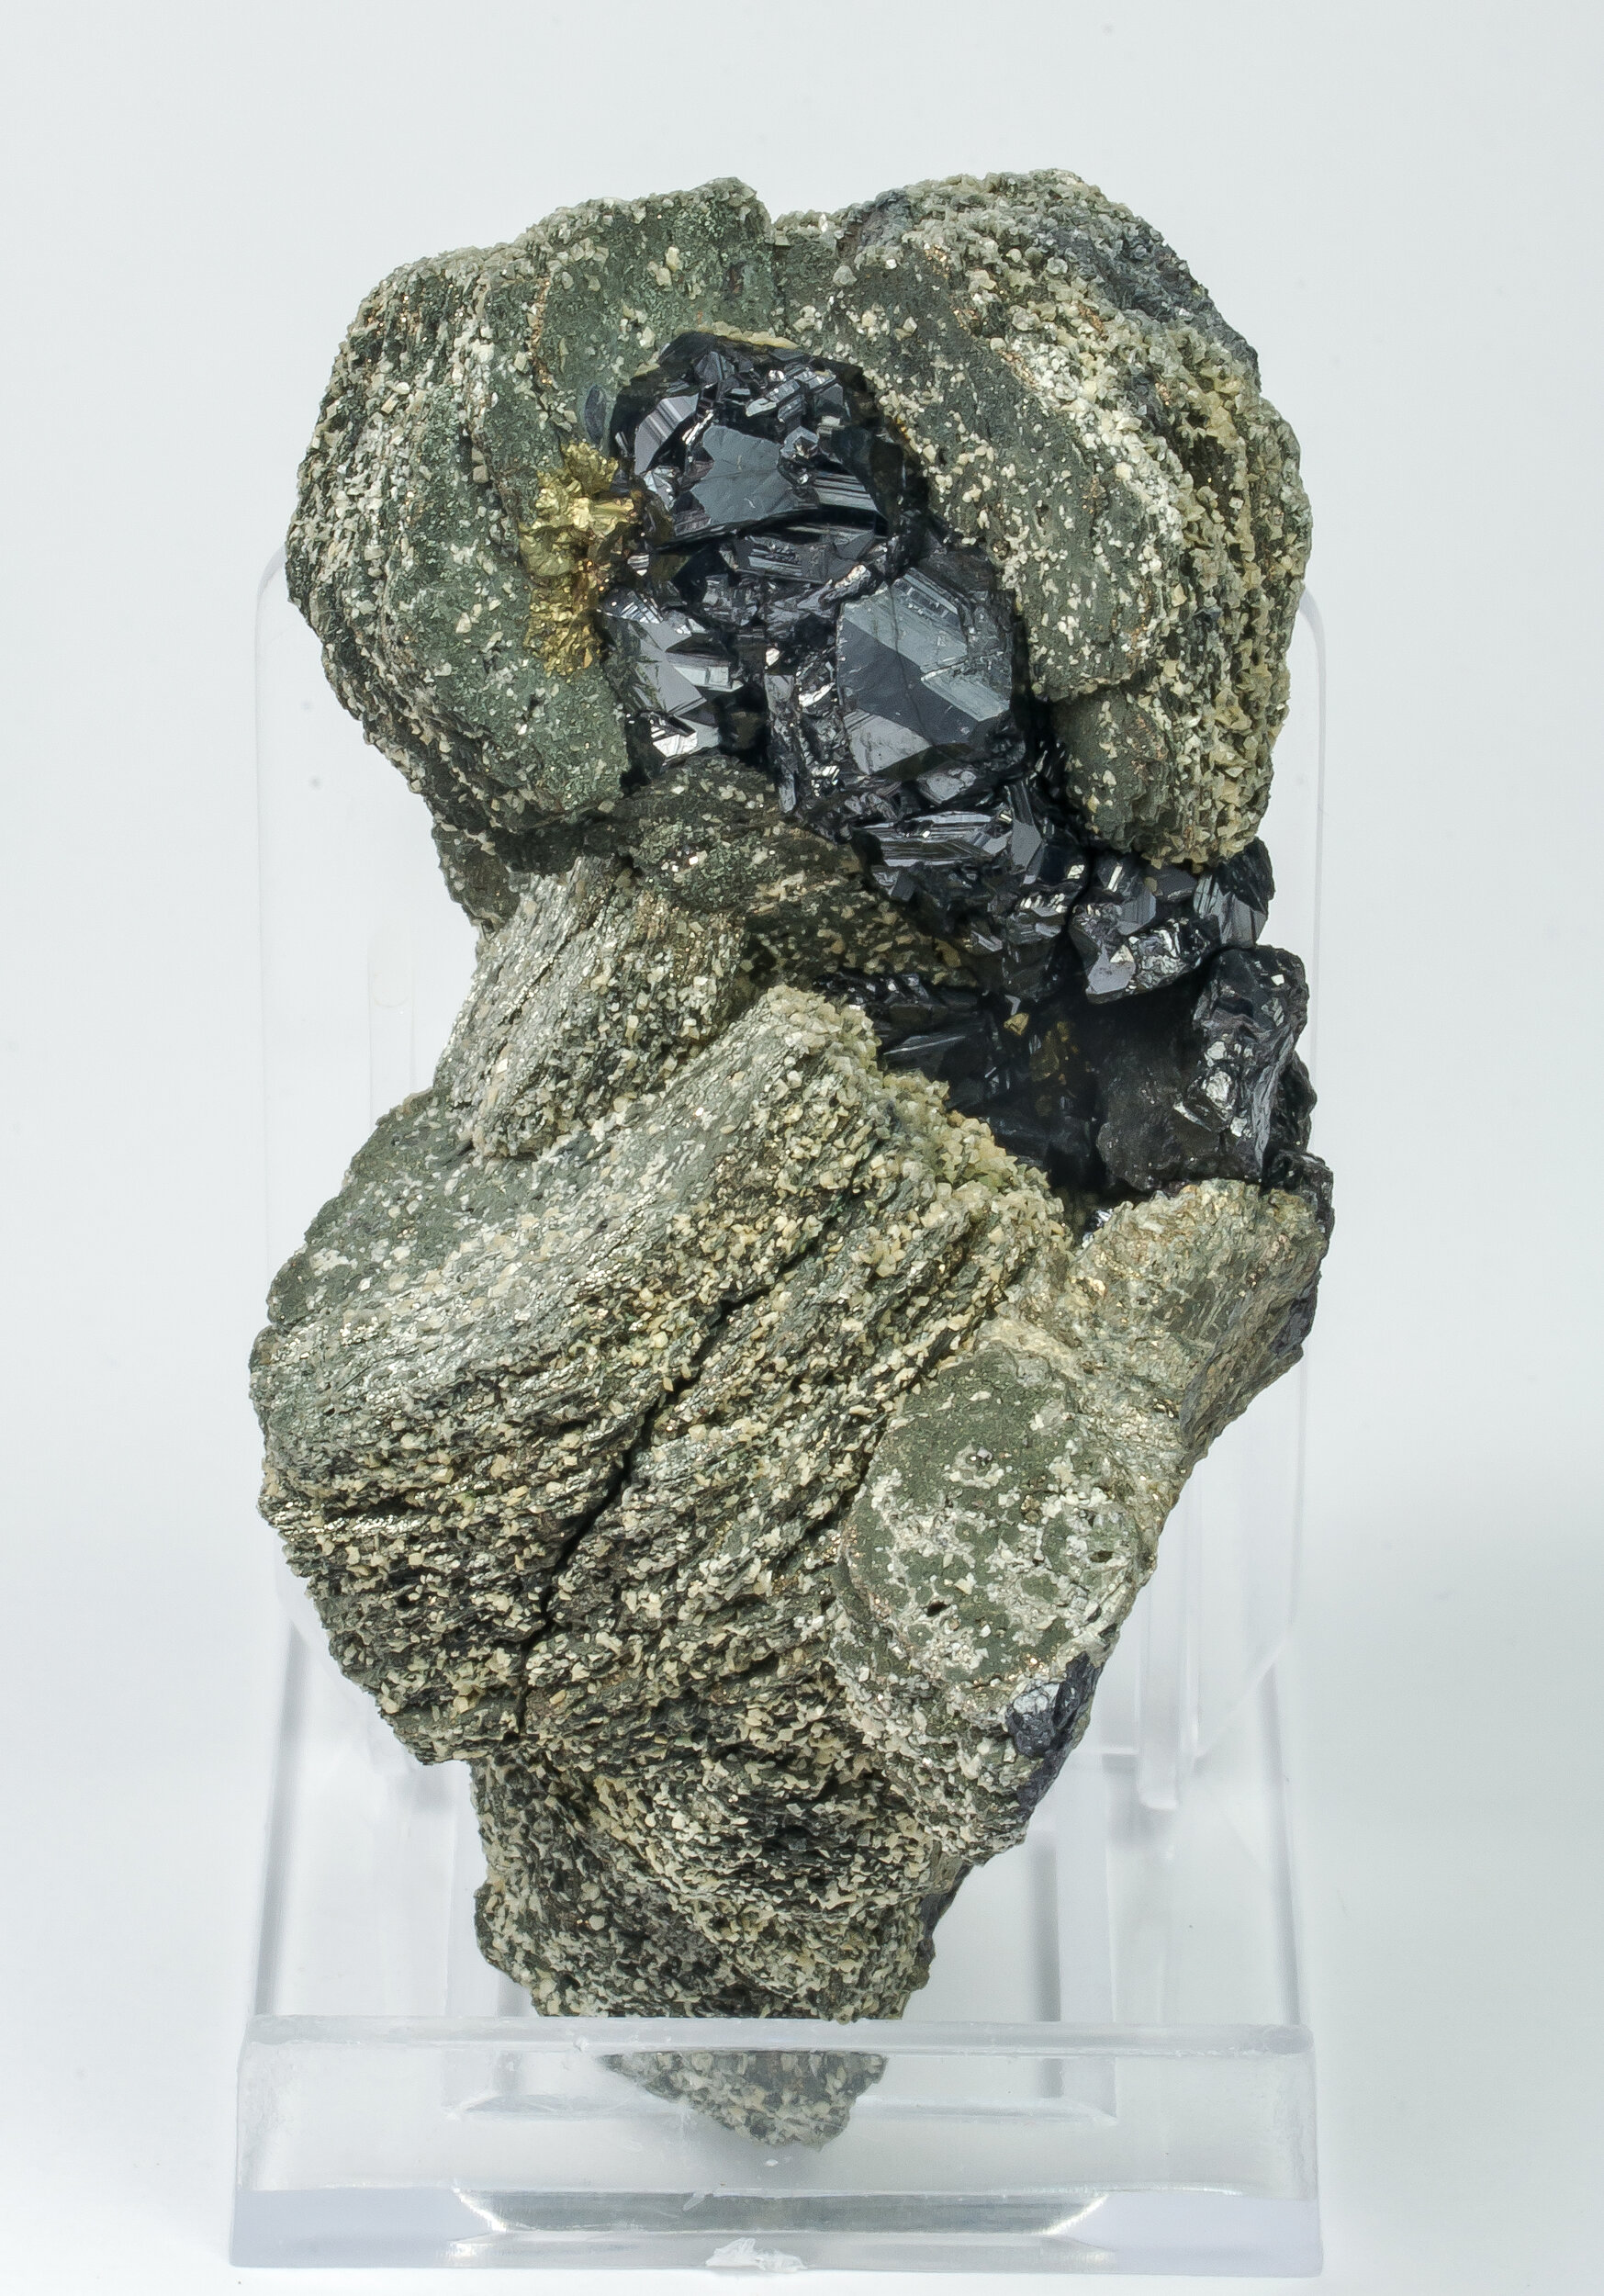 specimens/s_imagesCM/Pyrite-18EB96_f.jpg